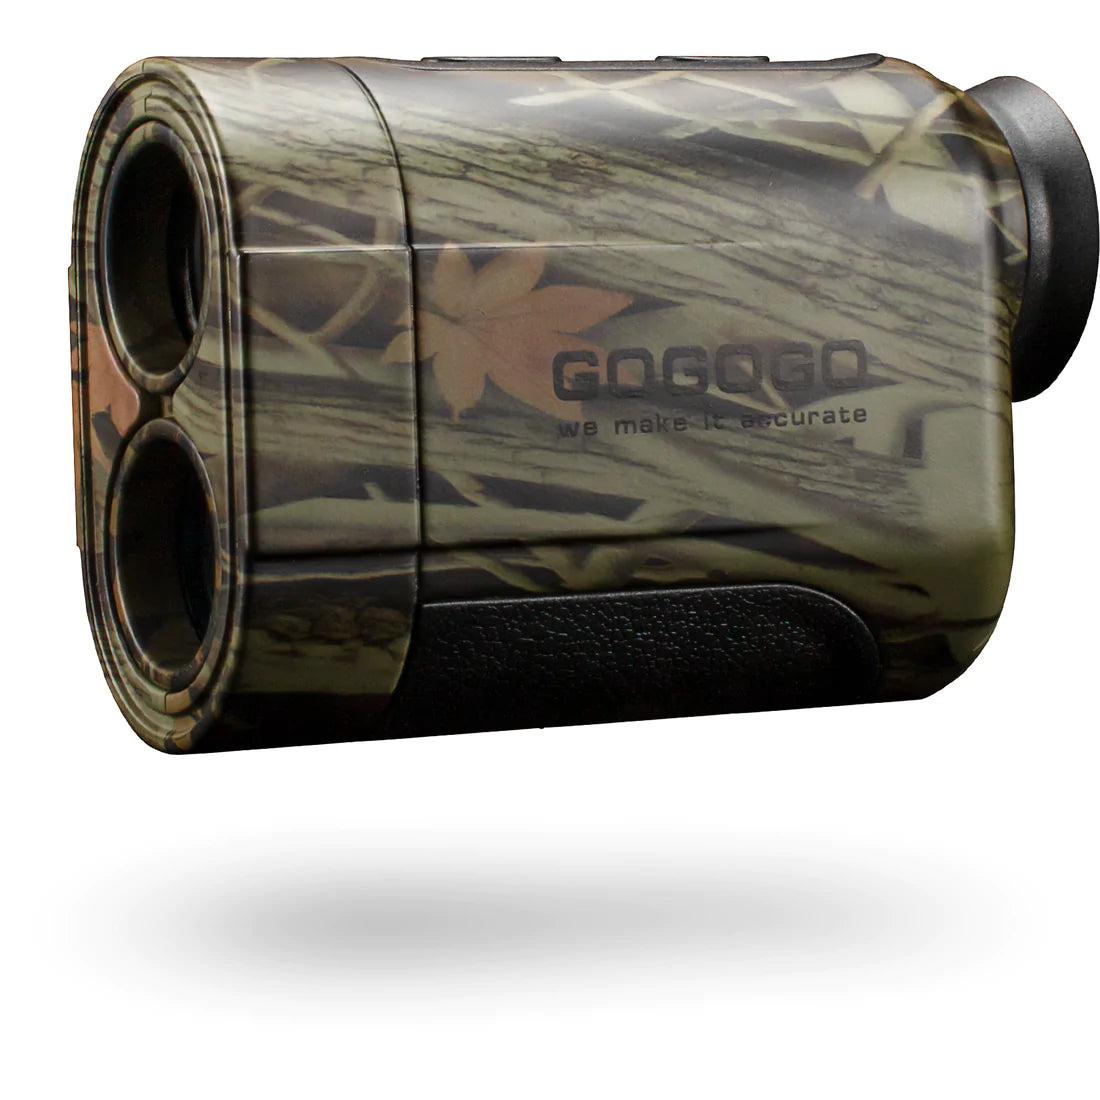 Gogogo Rangefinder GS34 800/1200Y  Red Slope Display & 6X Magnificati -  Fairways 2 Bunkers